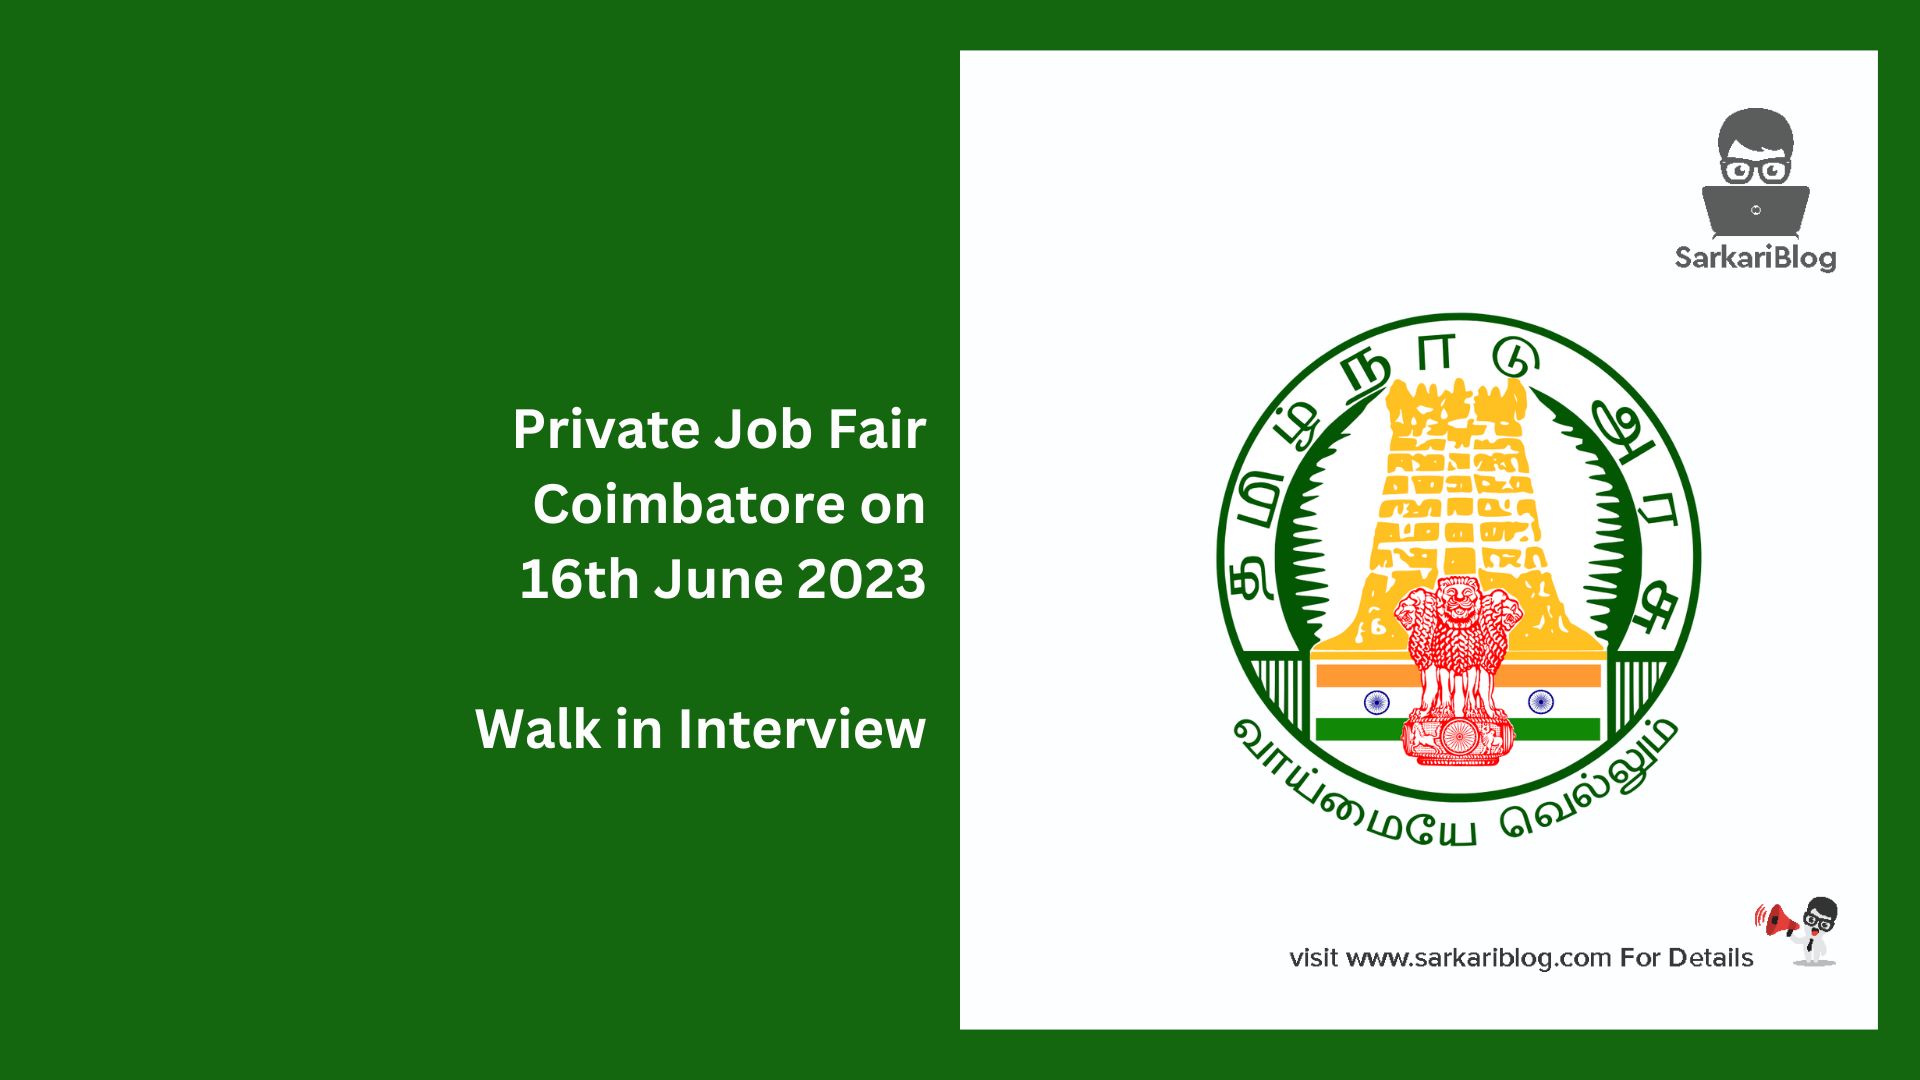 Private Job Fair Coimbatore on 16th June 2023